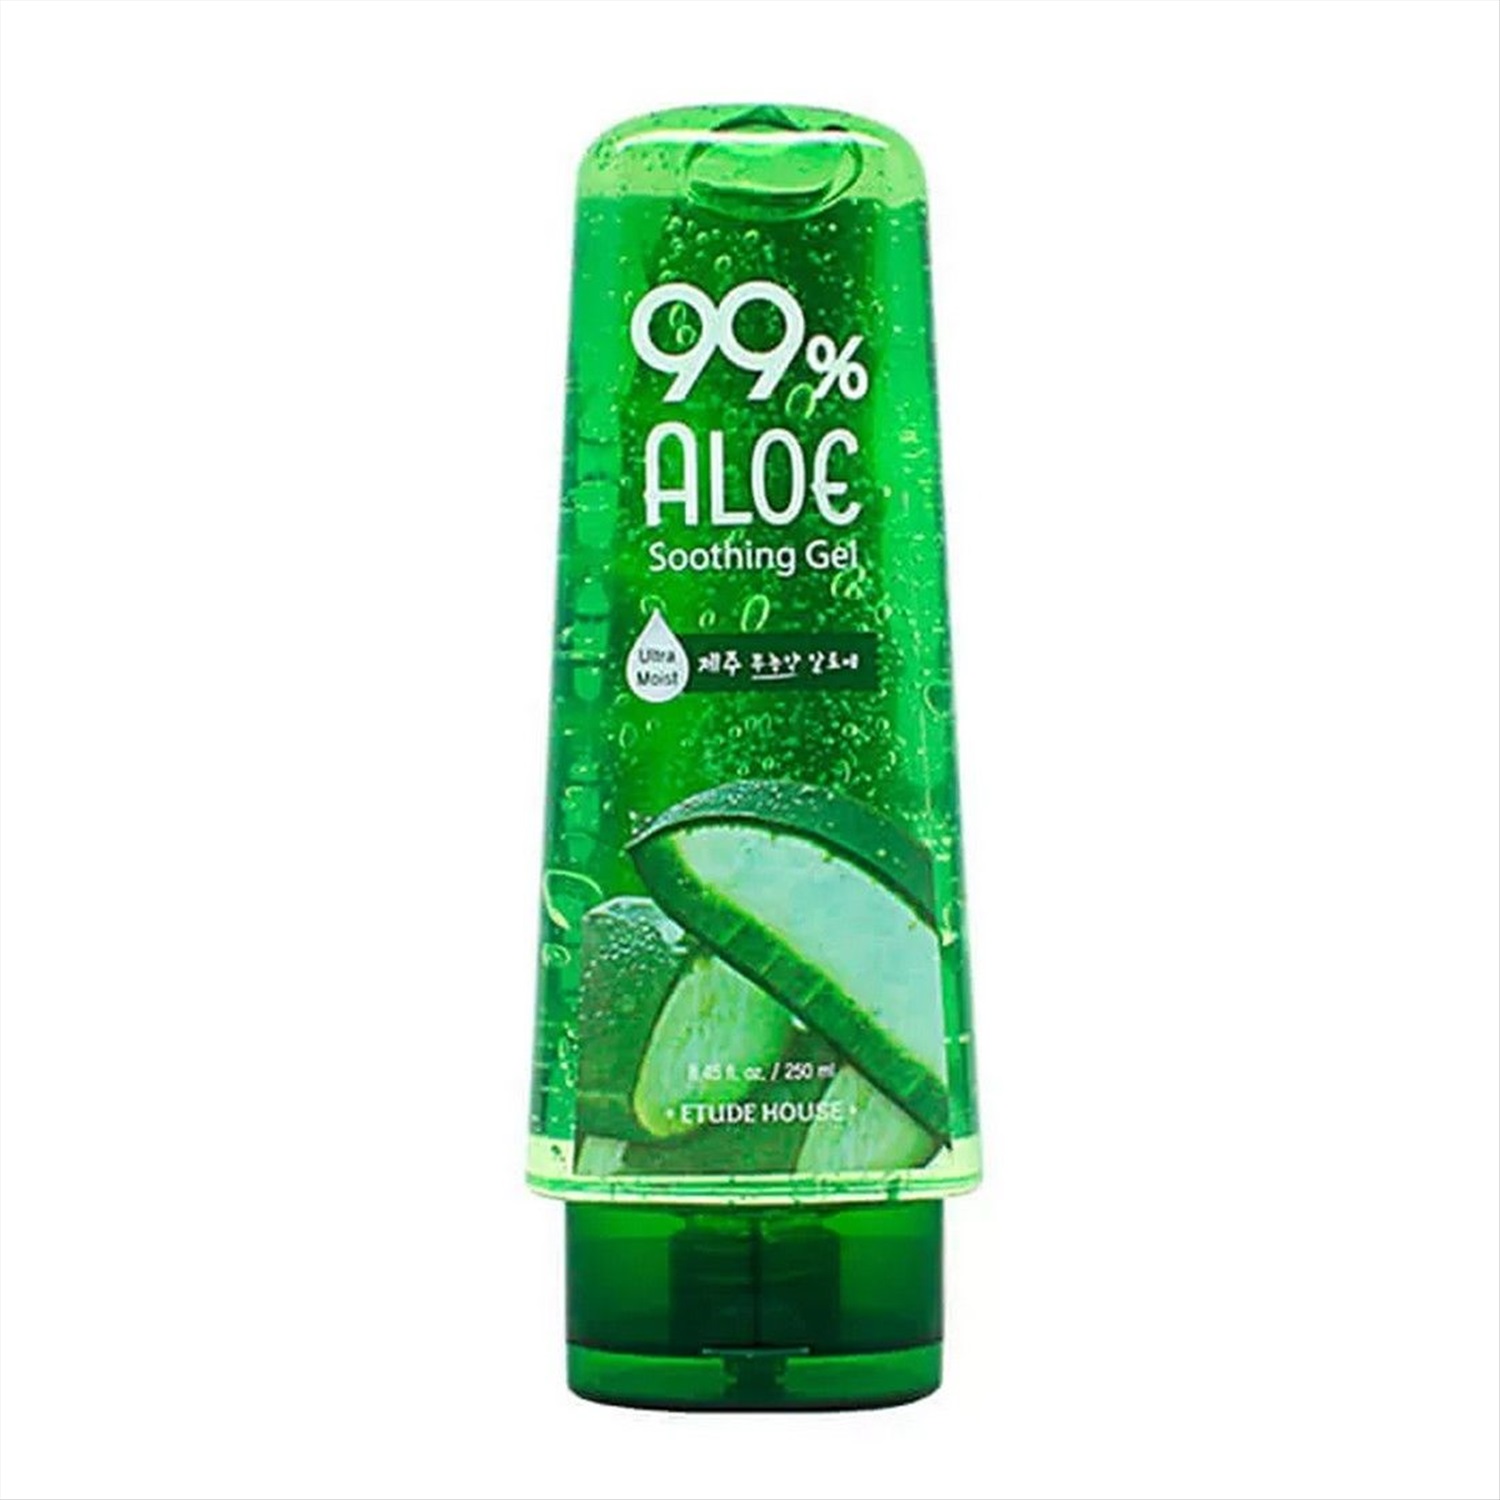 Aloe gel отзывы